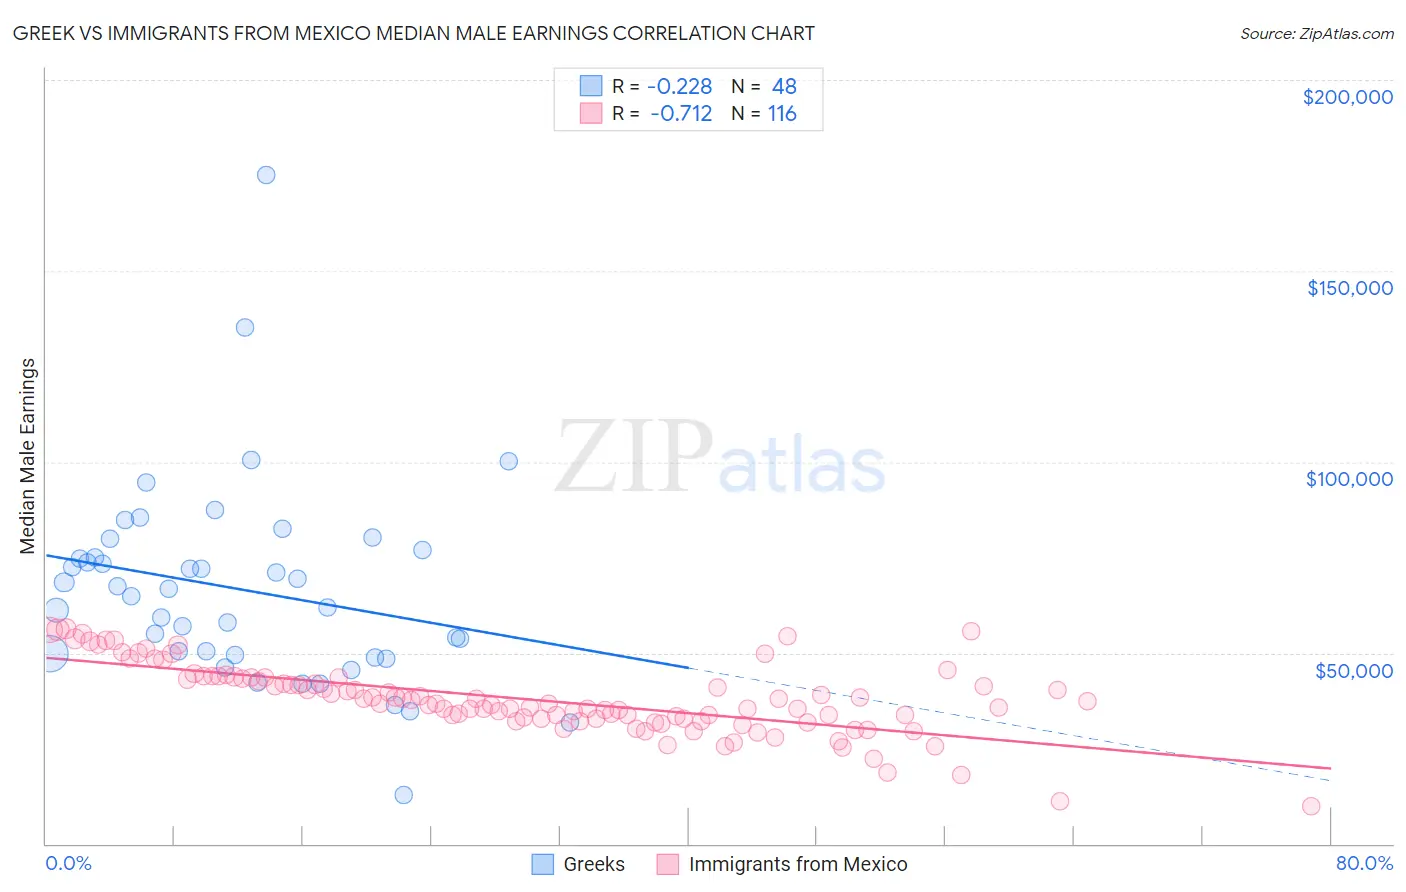 Greek vs Immigrants from Mexico Median Male Earnings